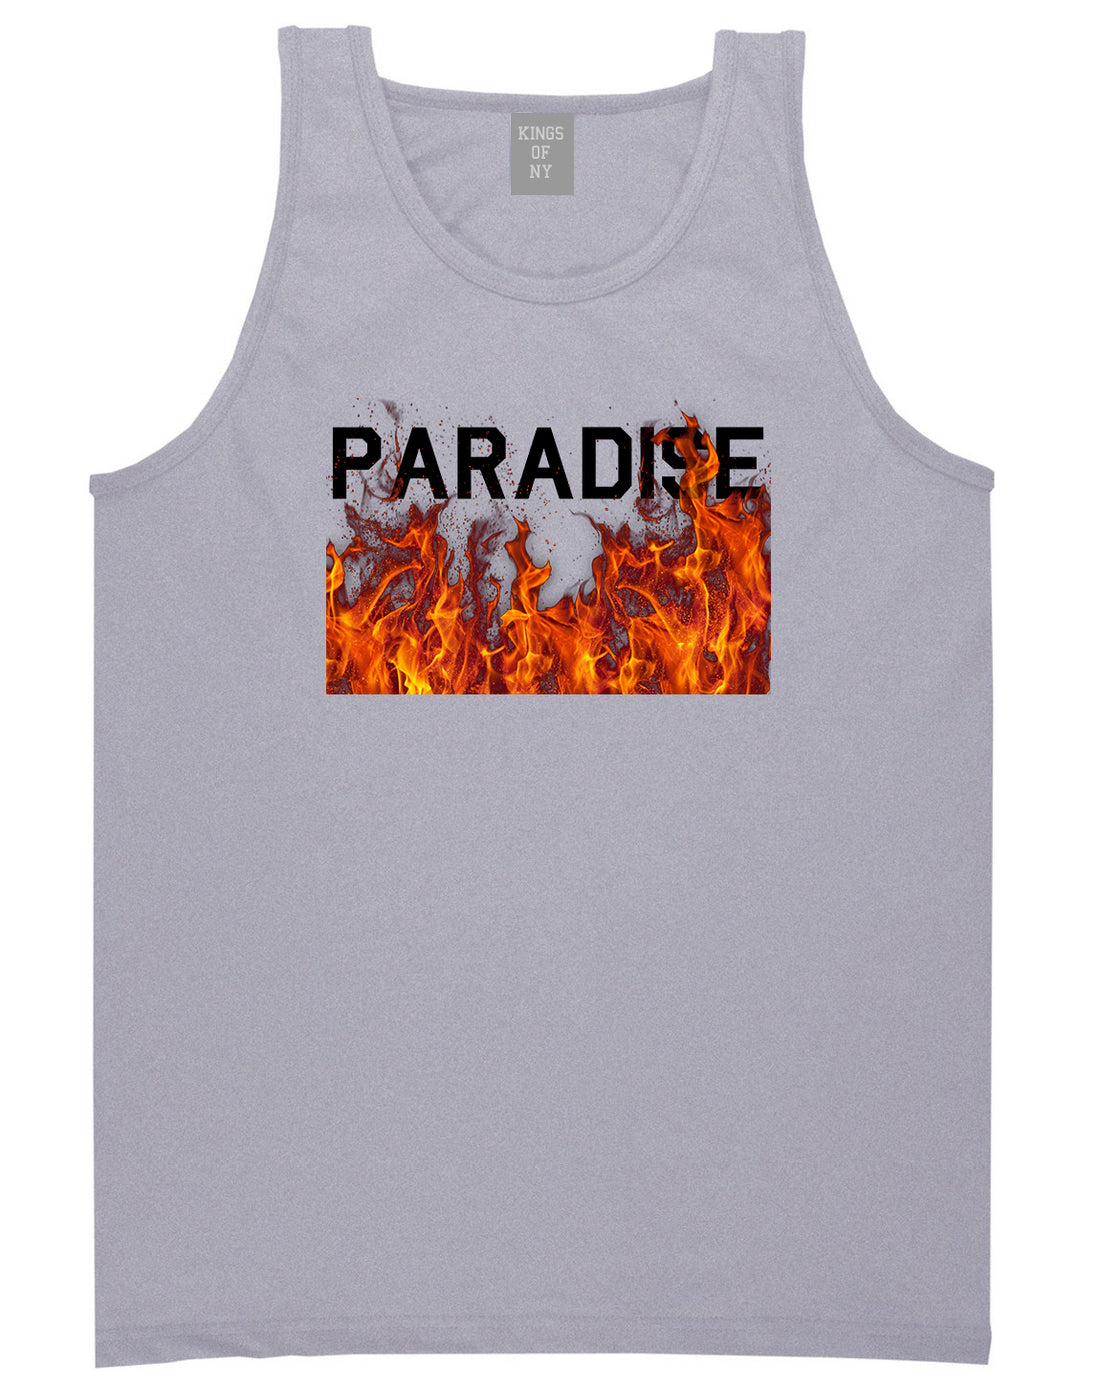 Paradise Fire Mens Tank Top Shirt Grey by Kings Of NY